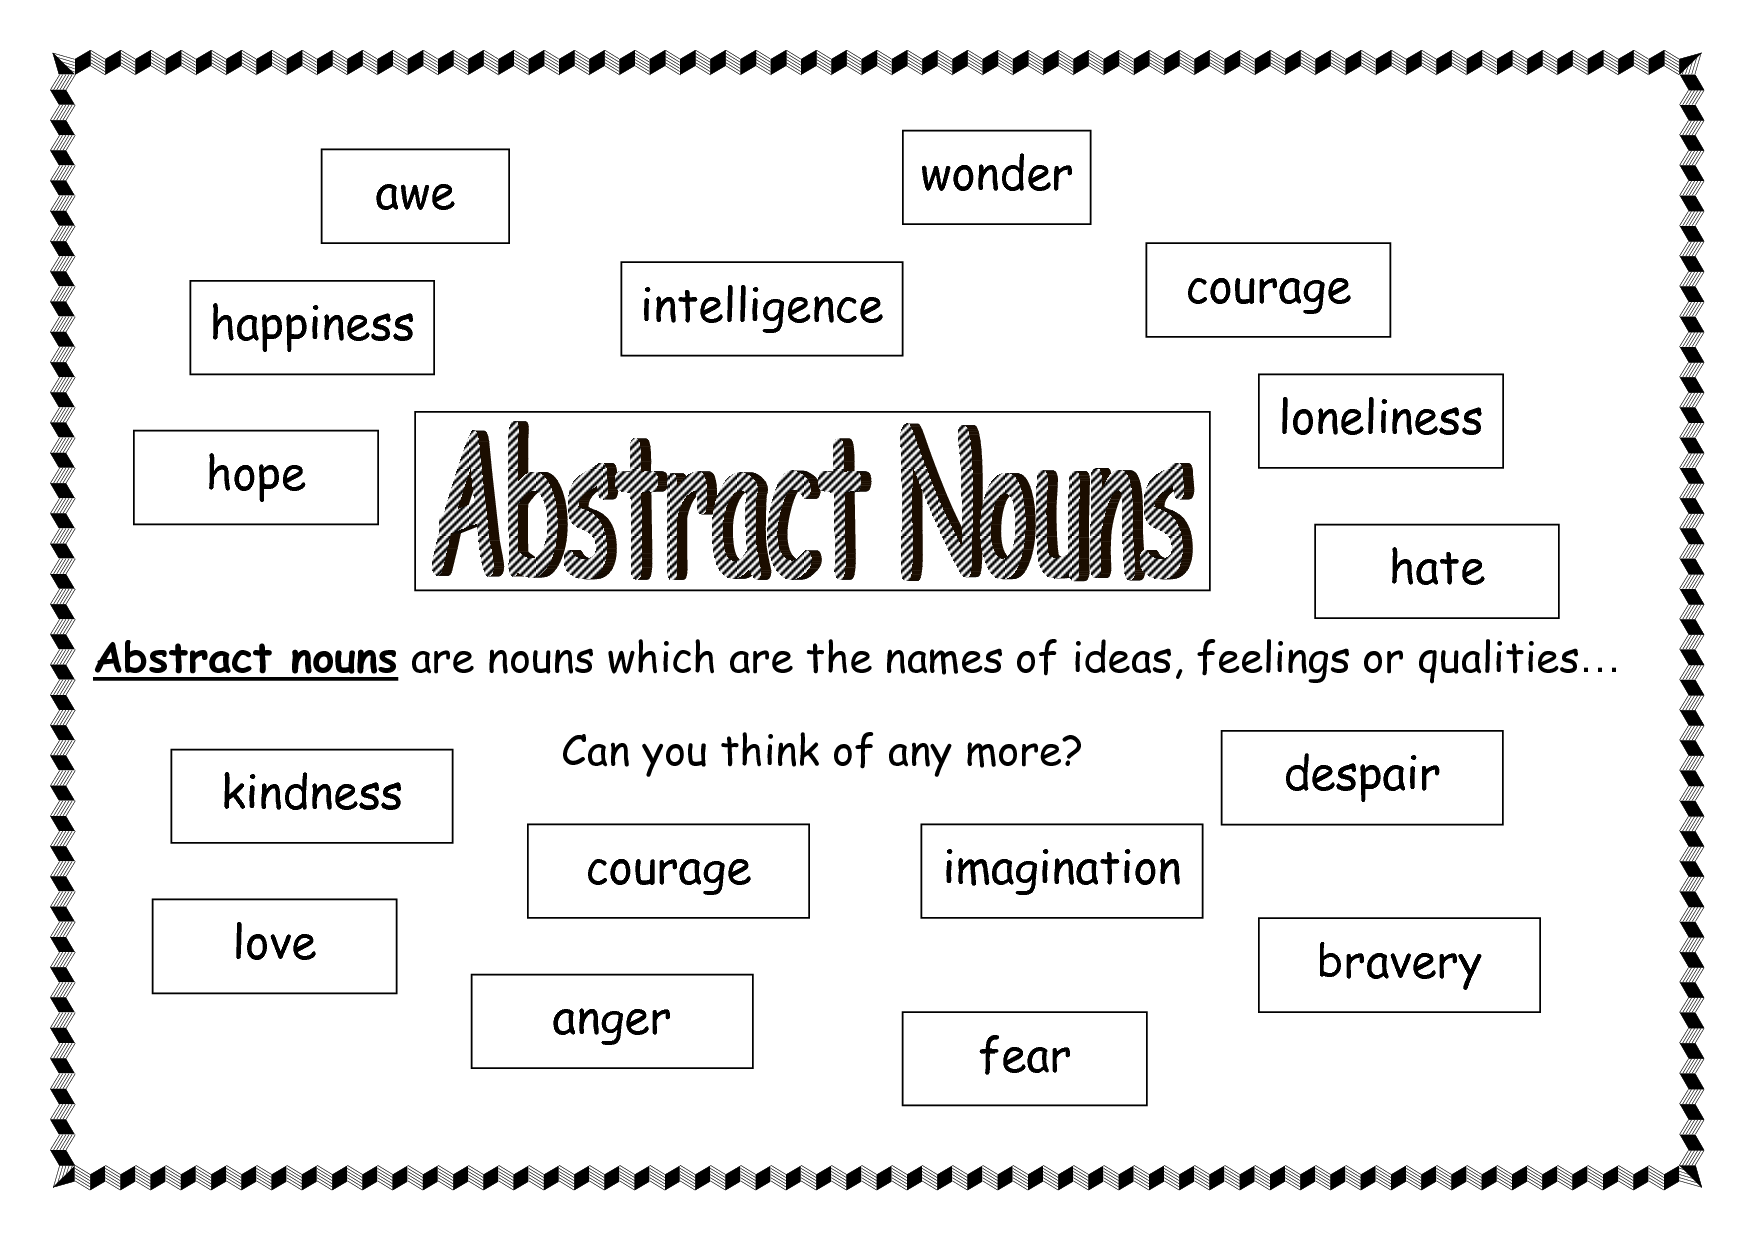 abstract noun คือ อาการนาม